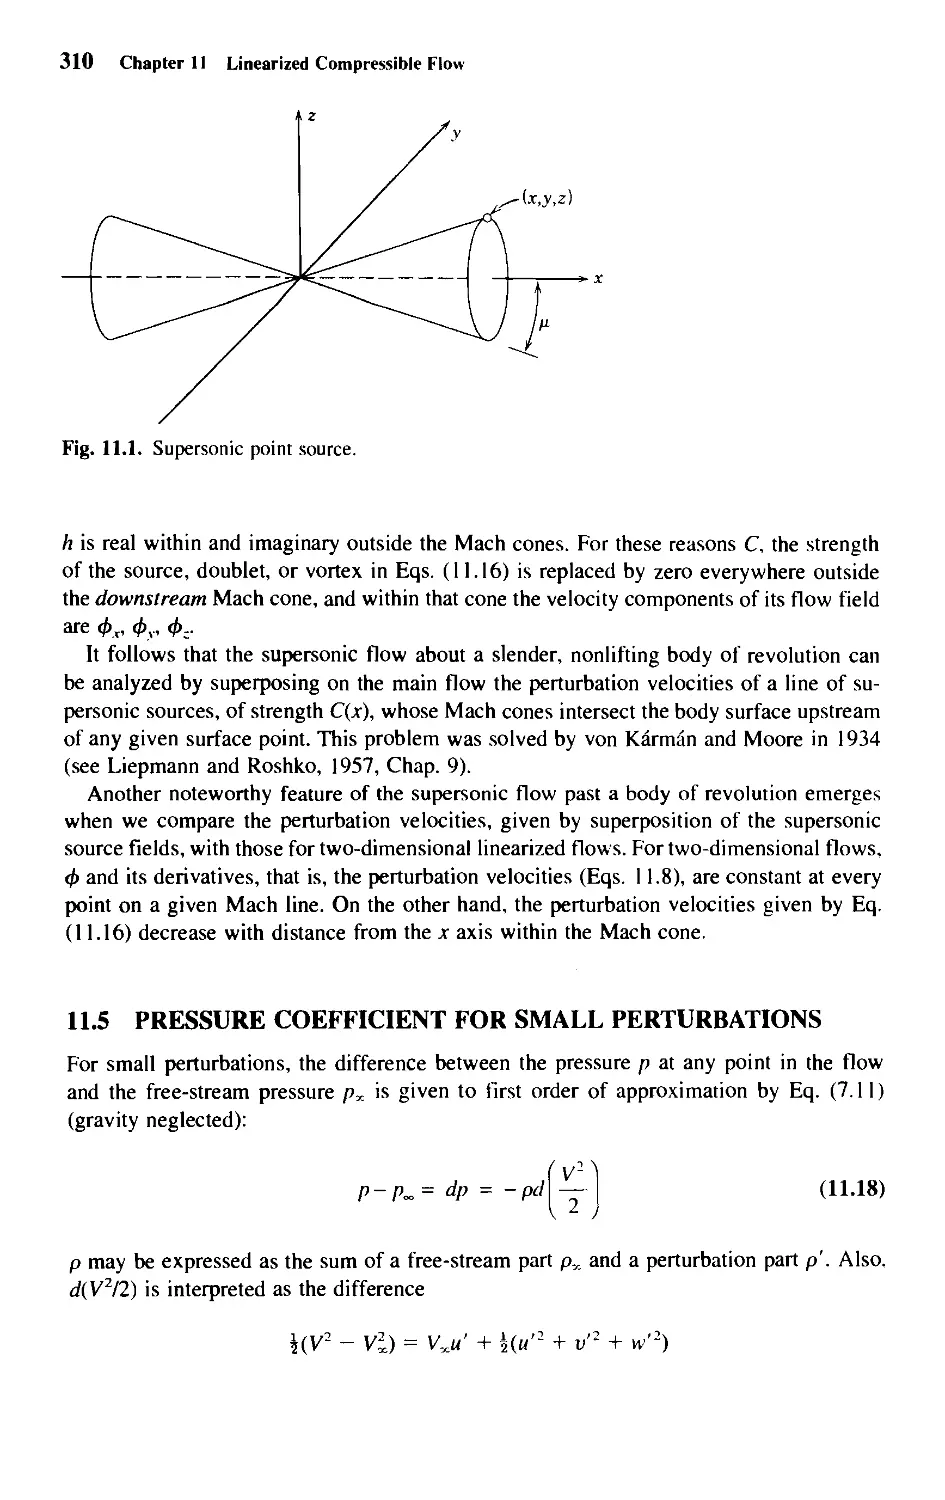 11.5 - Pressure Coefficient for Small Perturbations